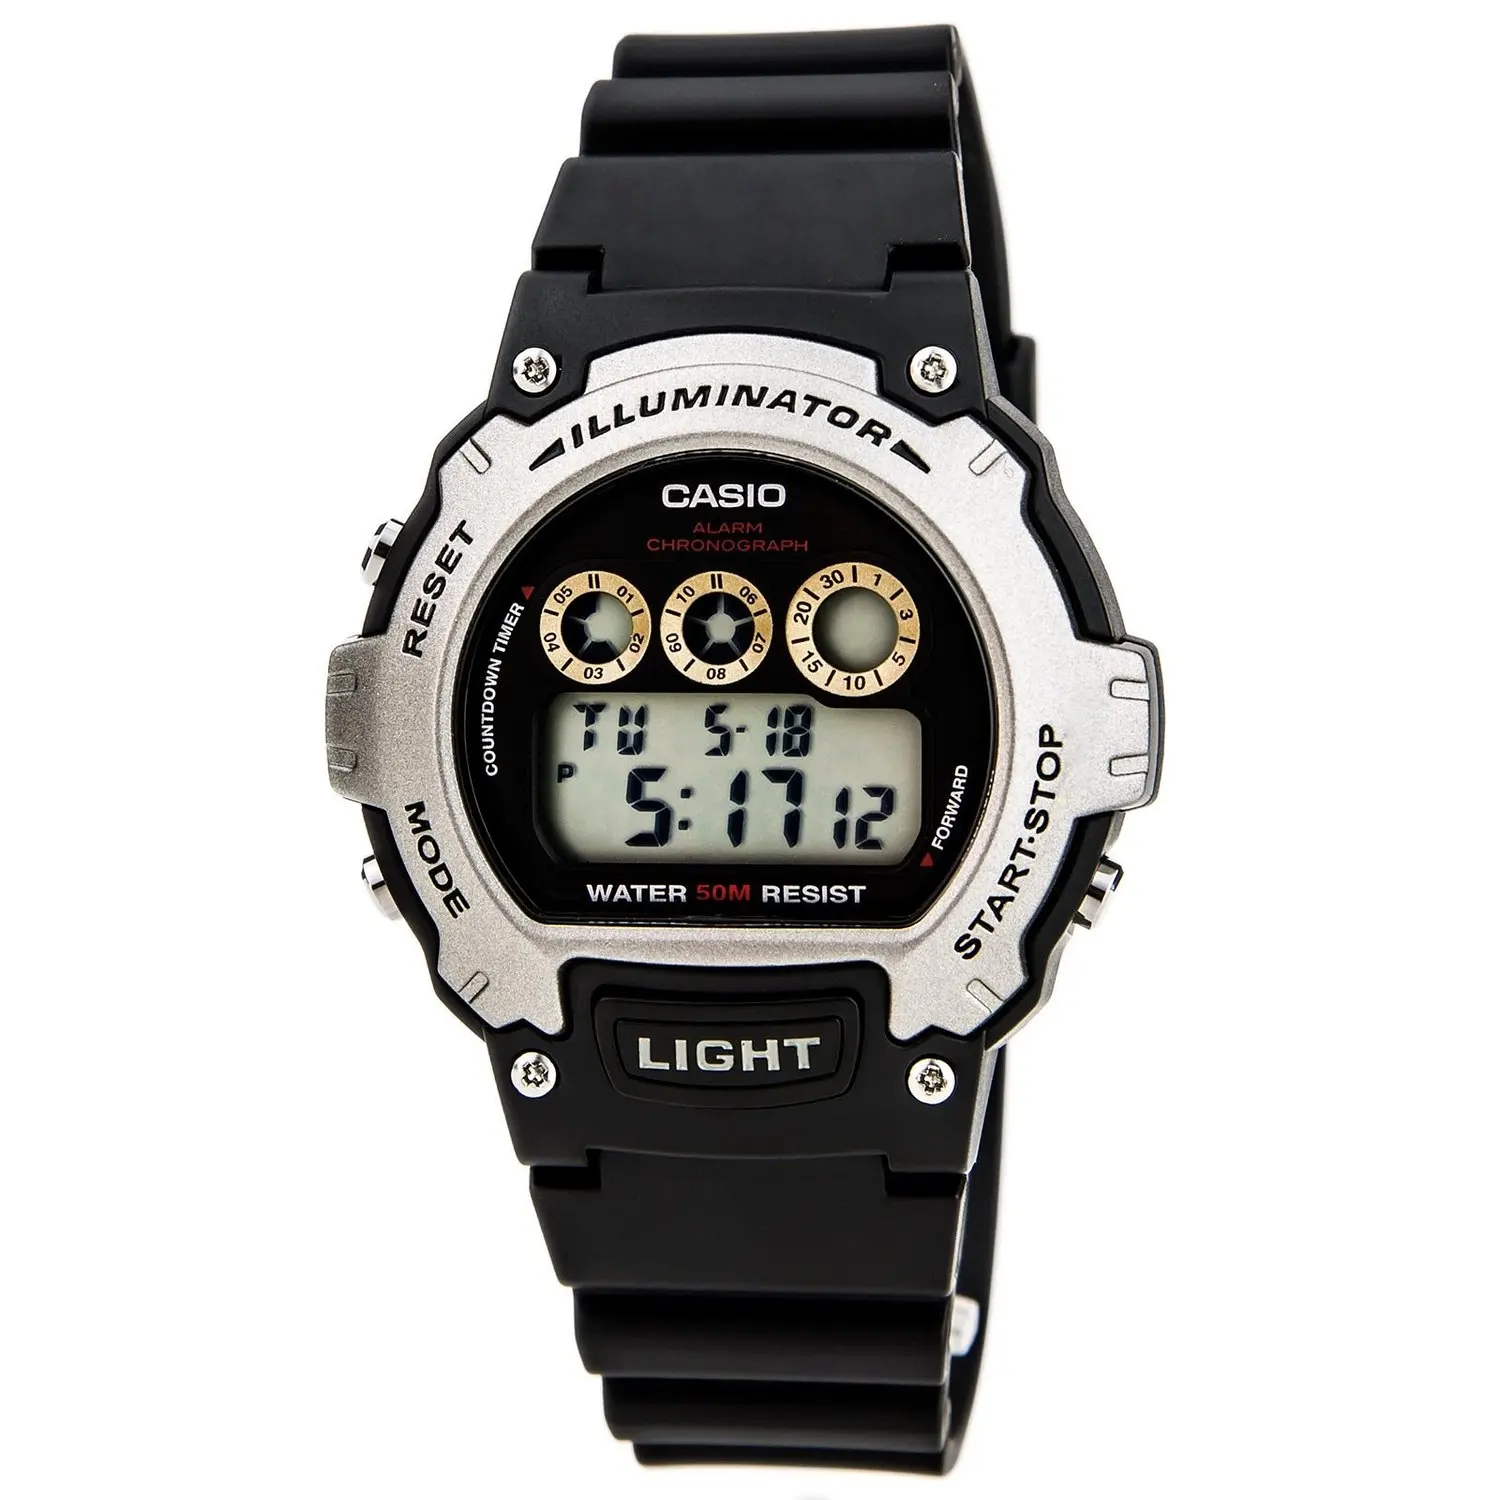 casio illuminator watch price